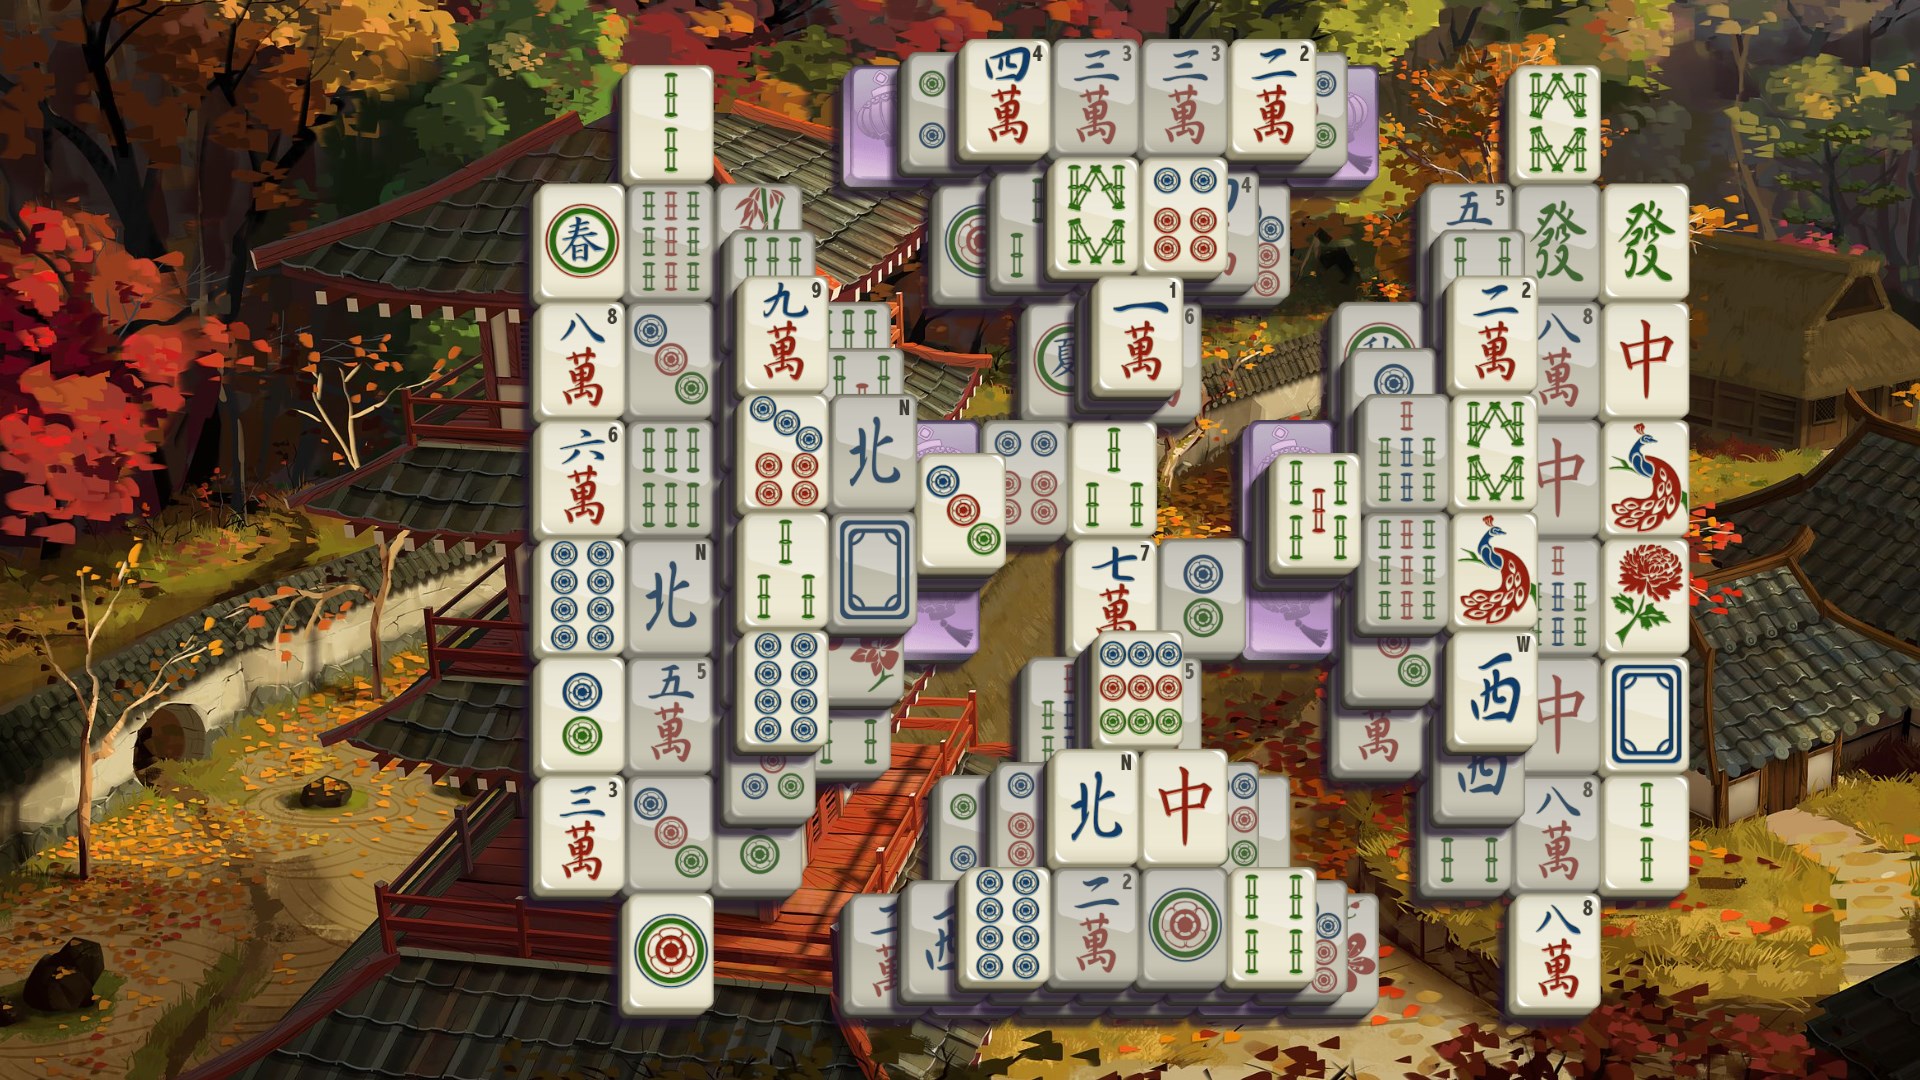 Get Mahjong Free ! - Microsoft Store en-AU